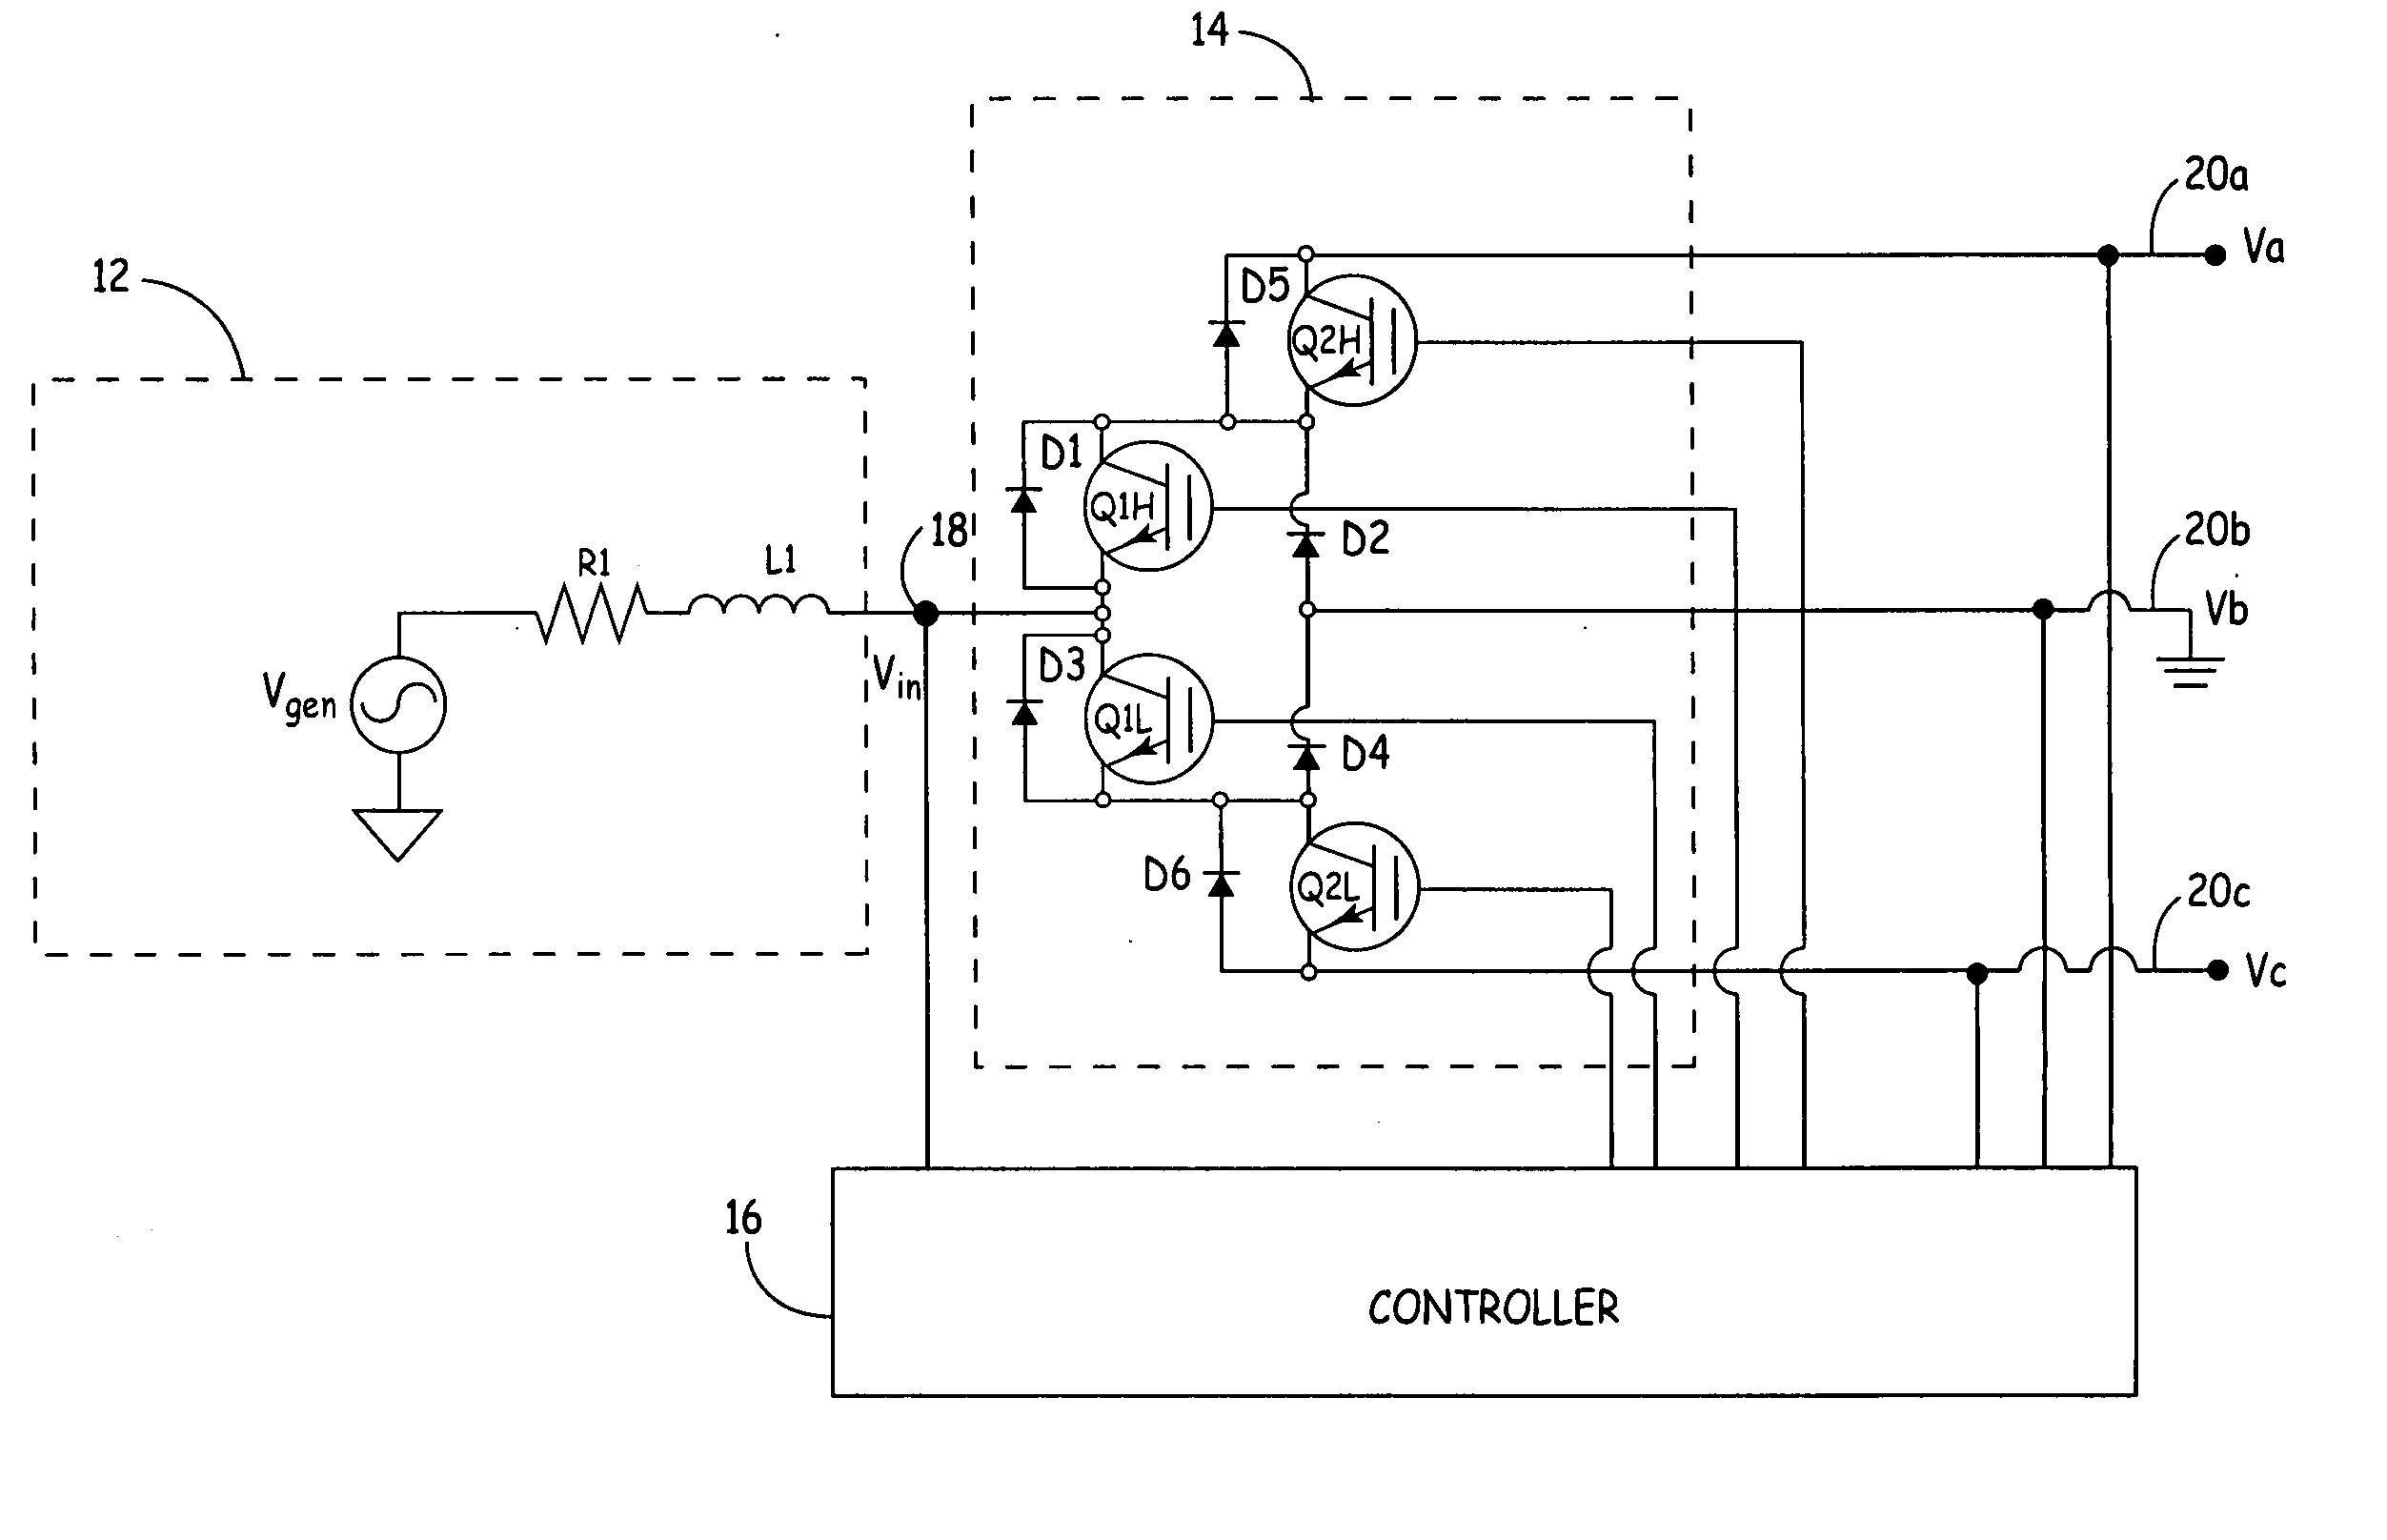 Voltage control and harmonic minimization of multi-level converter